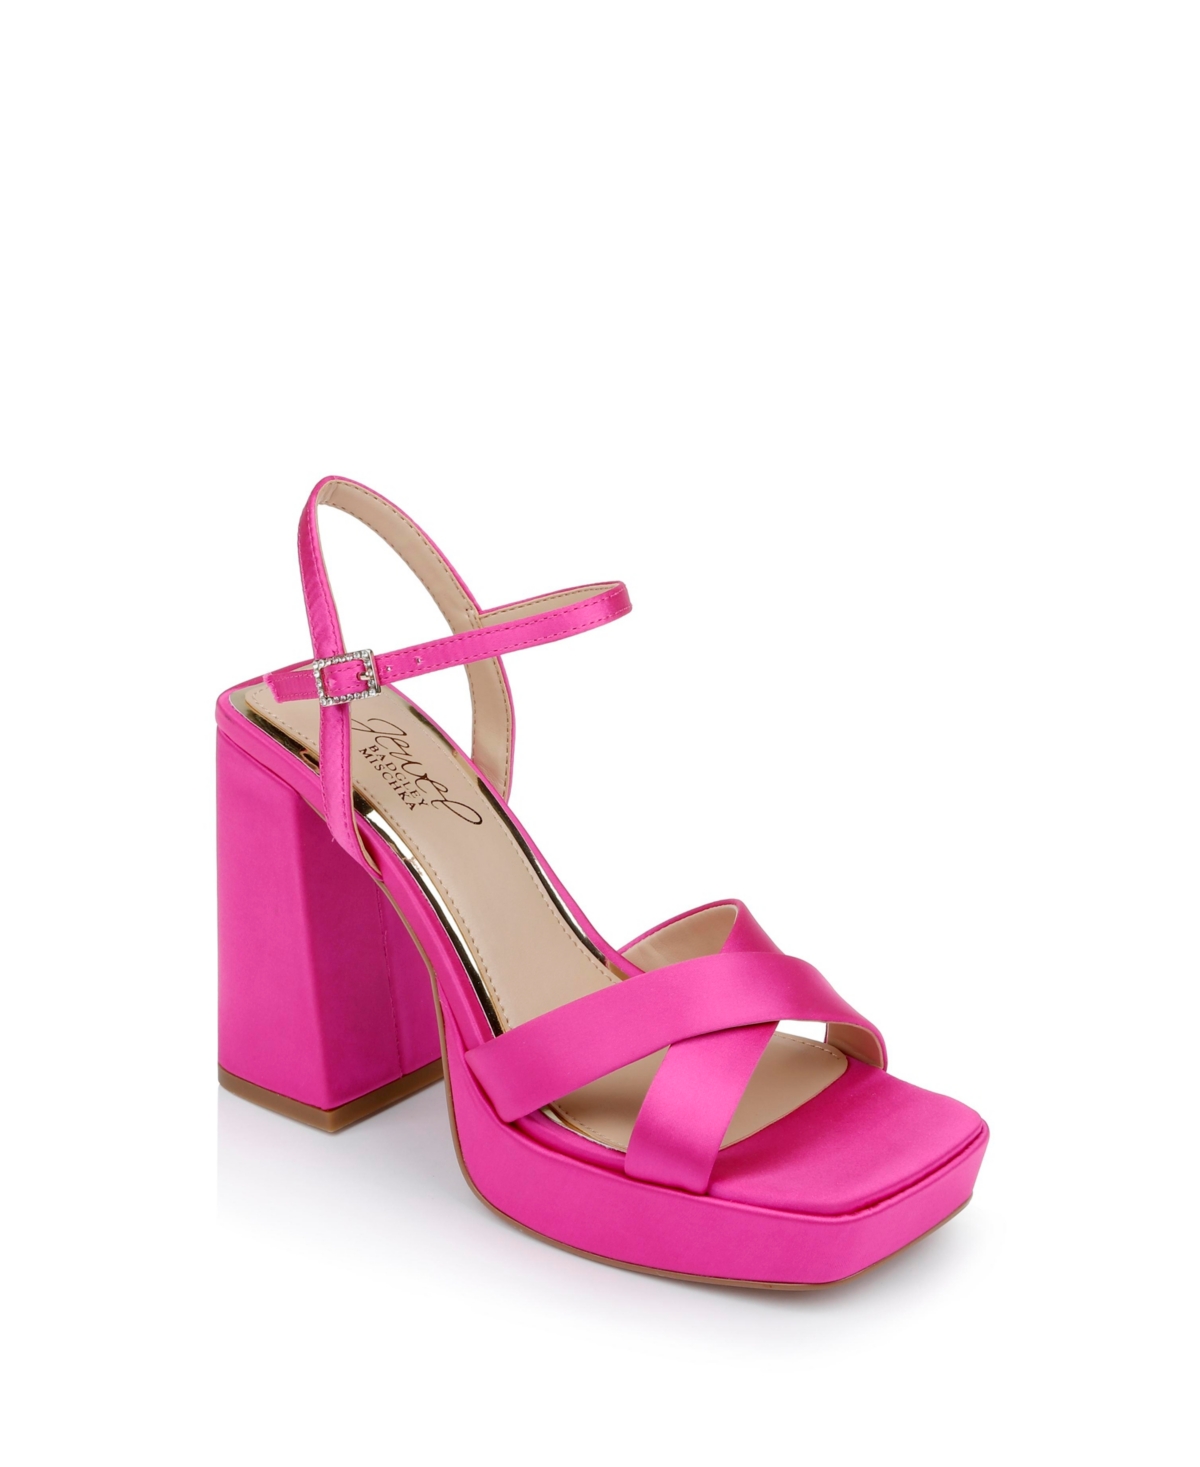 Women's Rainbow Platform Evening Sandals - Neon Pink Satin